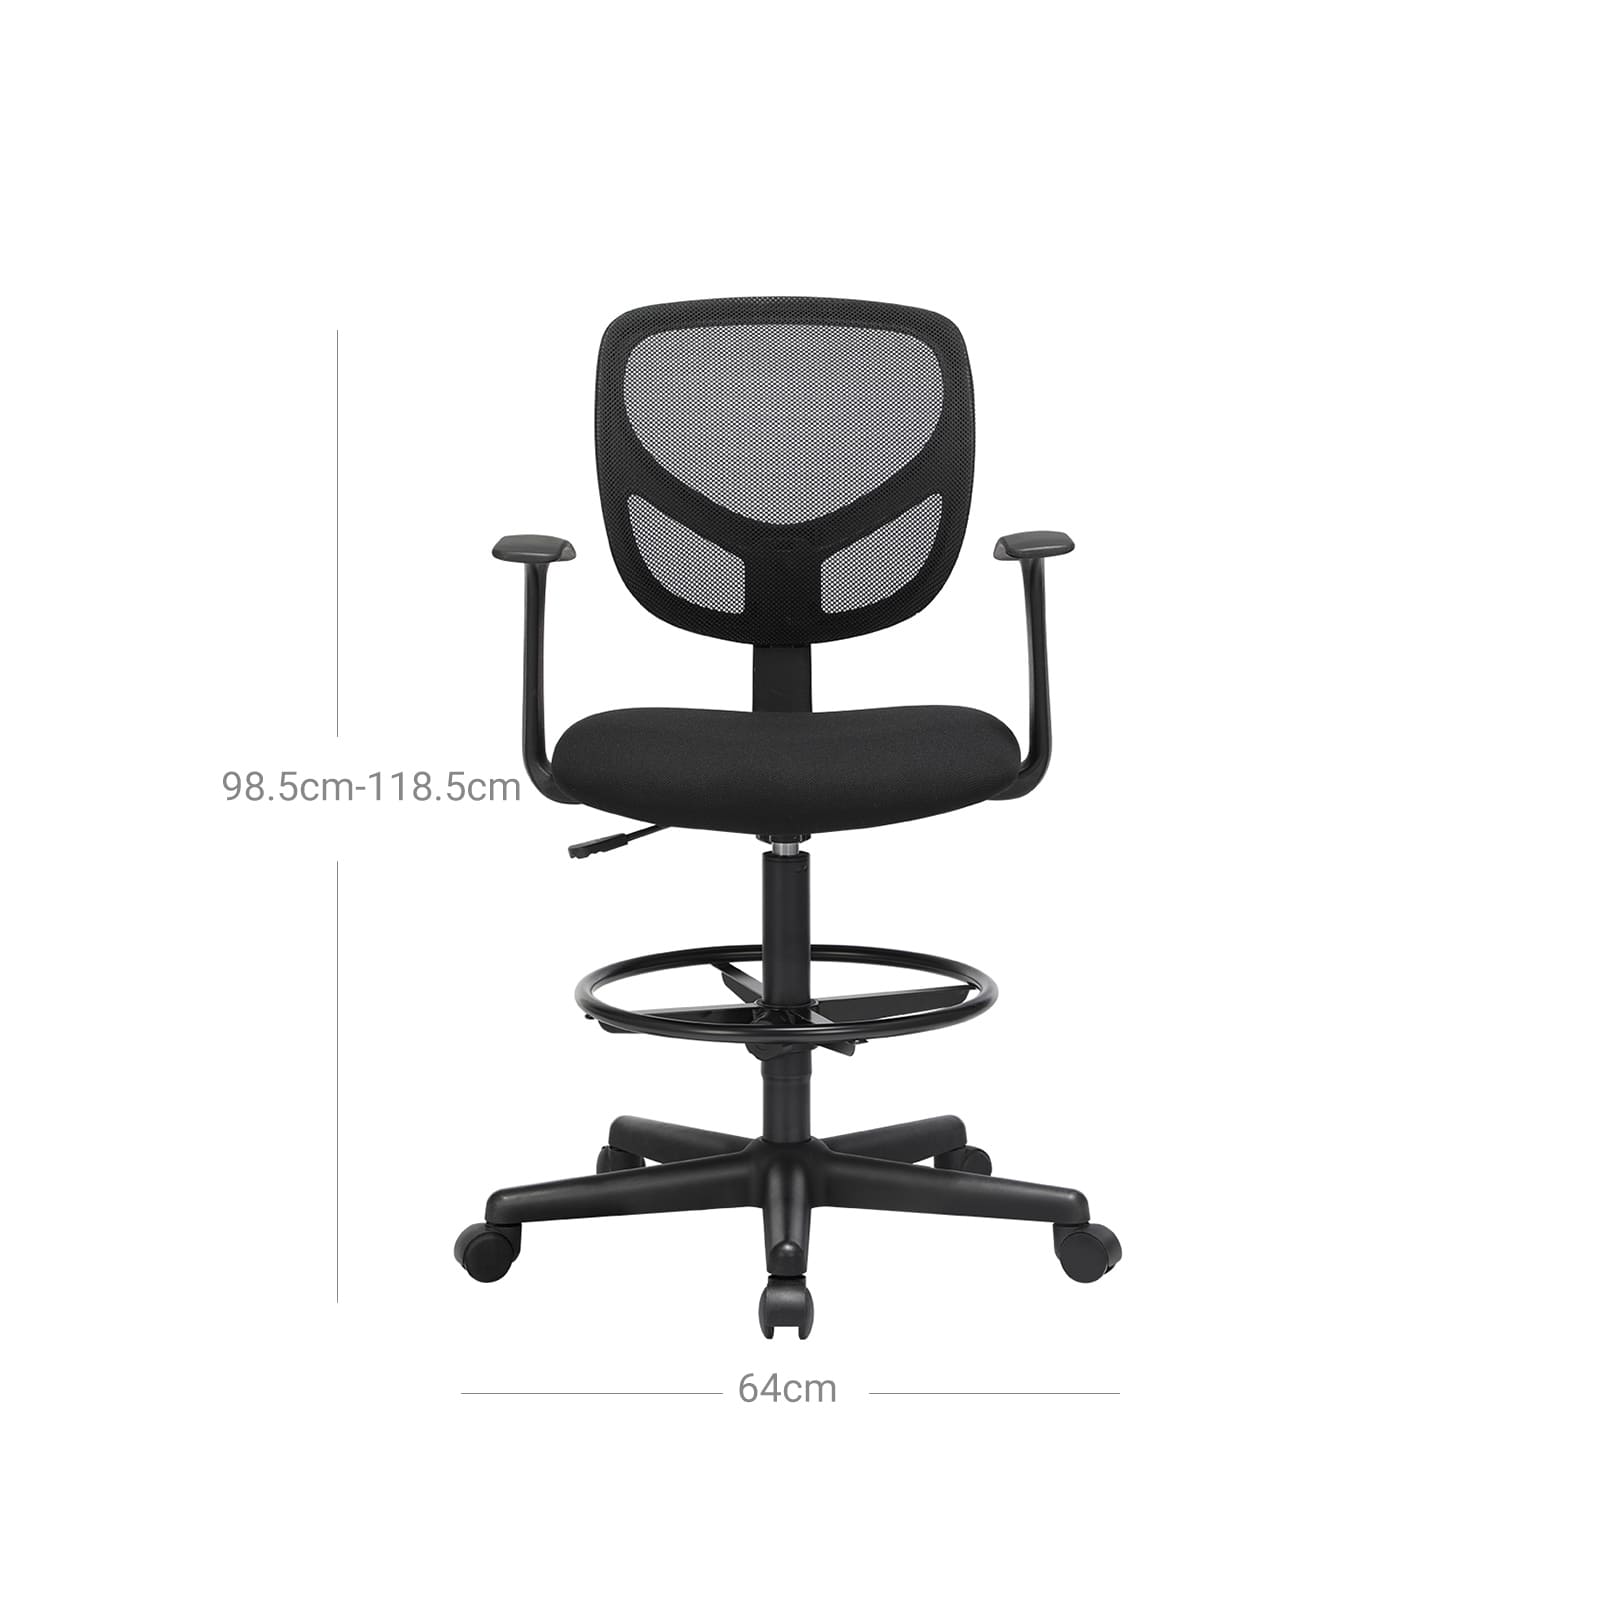 Bürostuhl, ergonomischer Stuhl, Bürostuhl aus Stoff, schwarz - SONGMICS, H 98.5-118.5 cm, B 64 cm